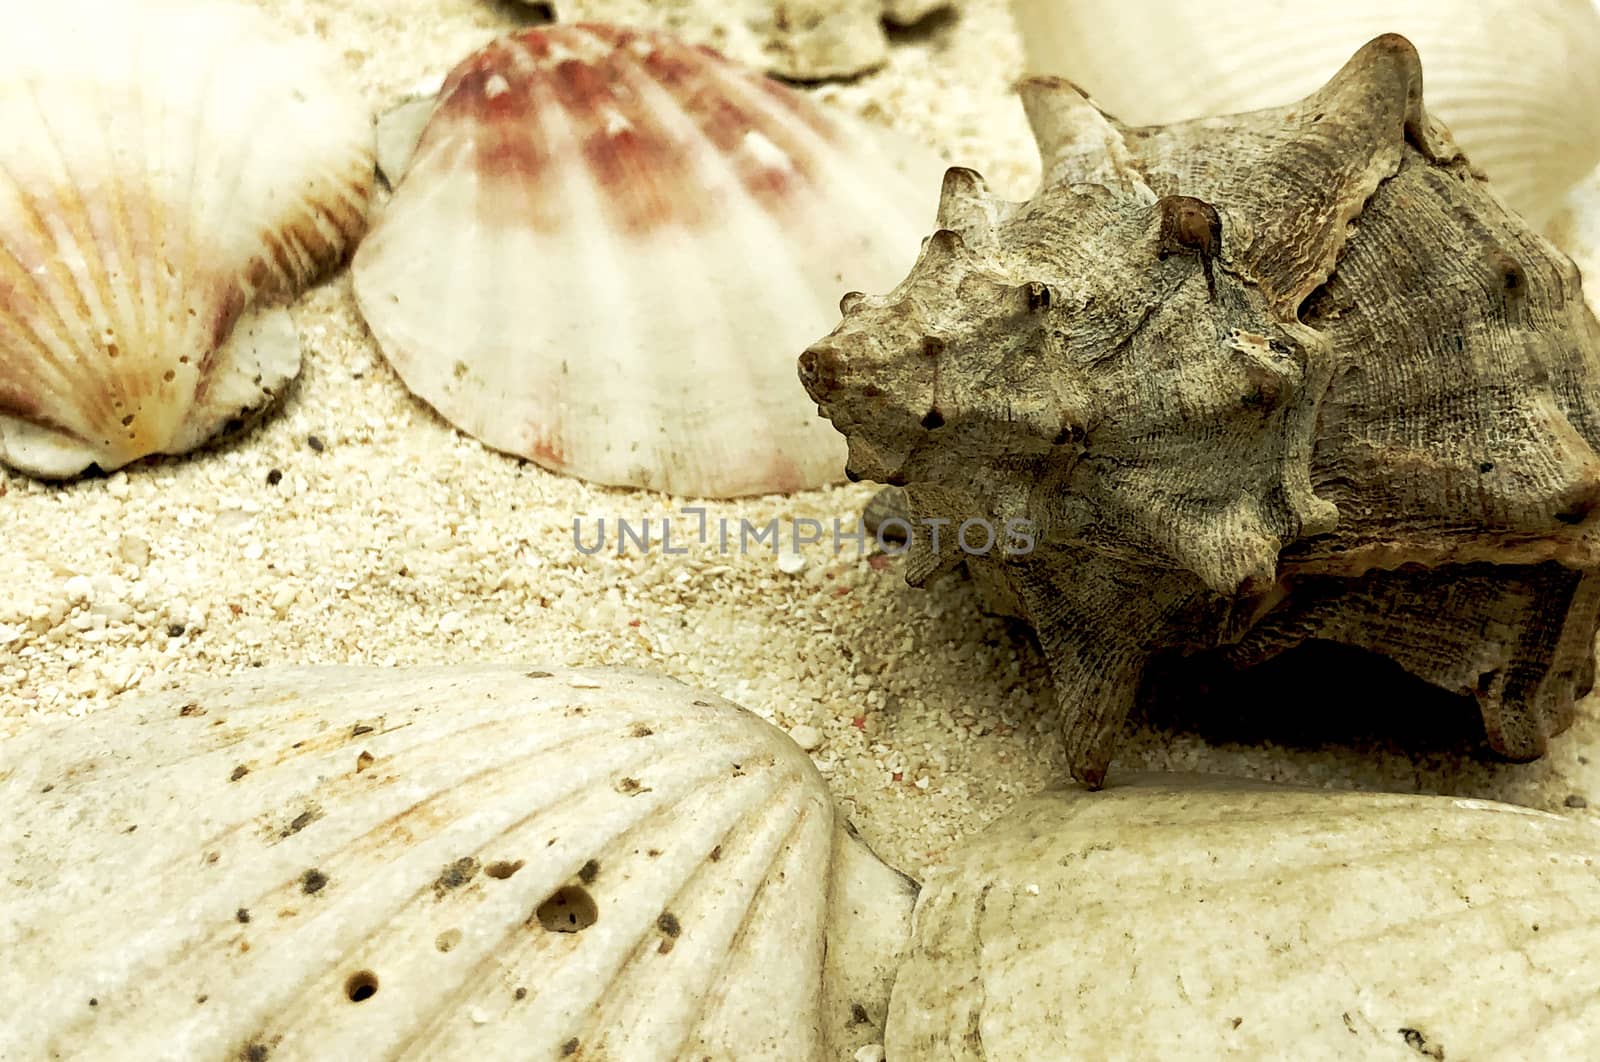 ocean sea shellfish and shells closeup on sand texture detail summer season travel beach concept